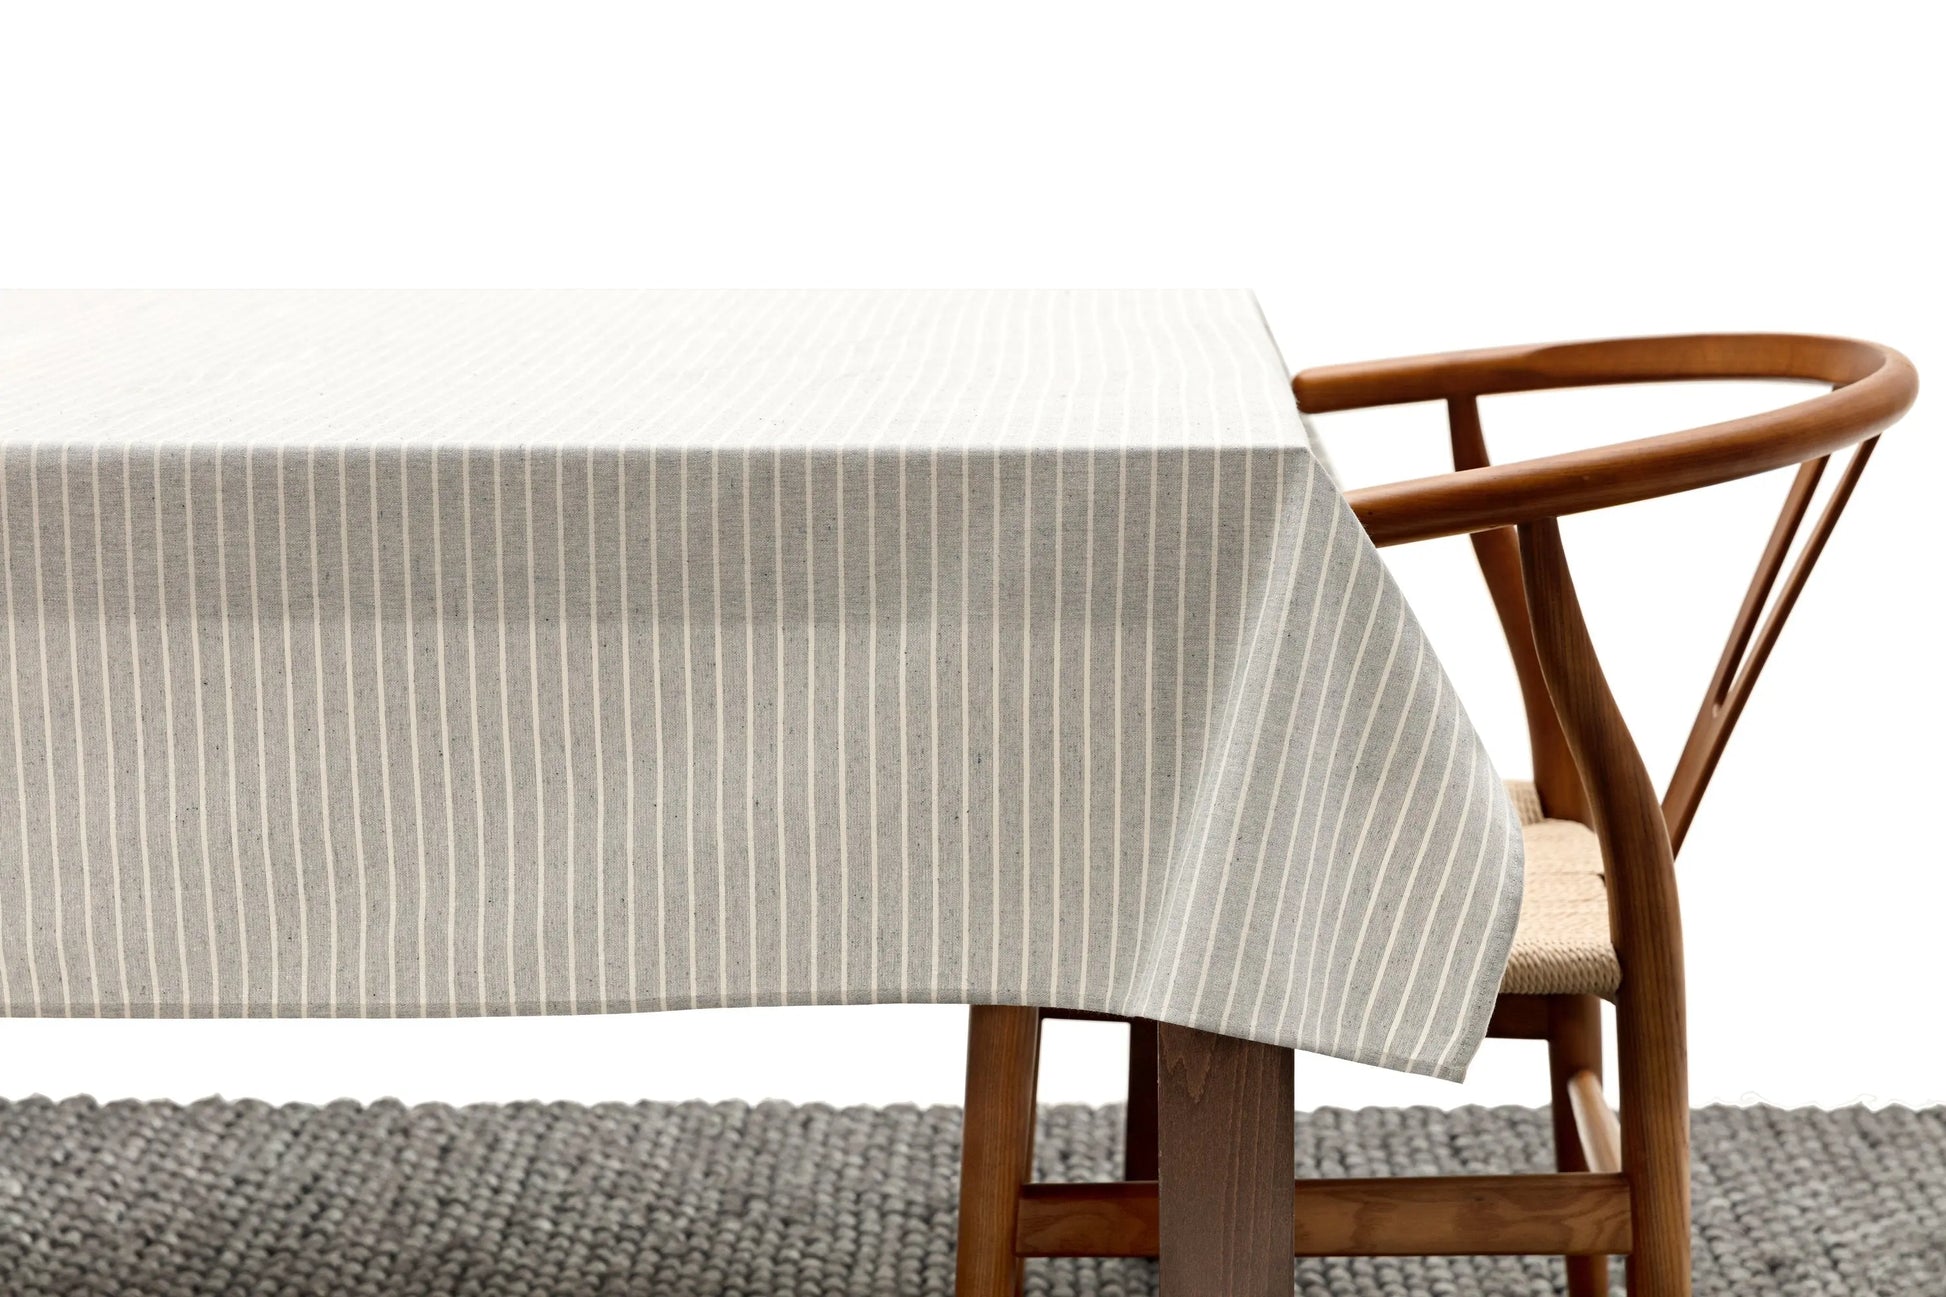 MEEMA Tablecloth / Grey Striped | Upcycled Cotton MEEMA